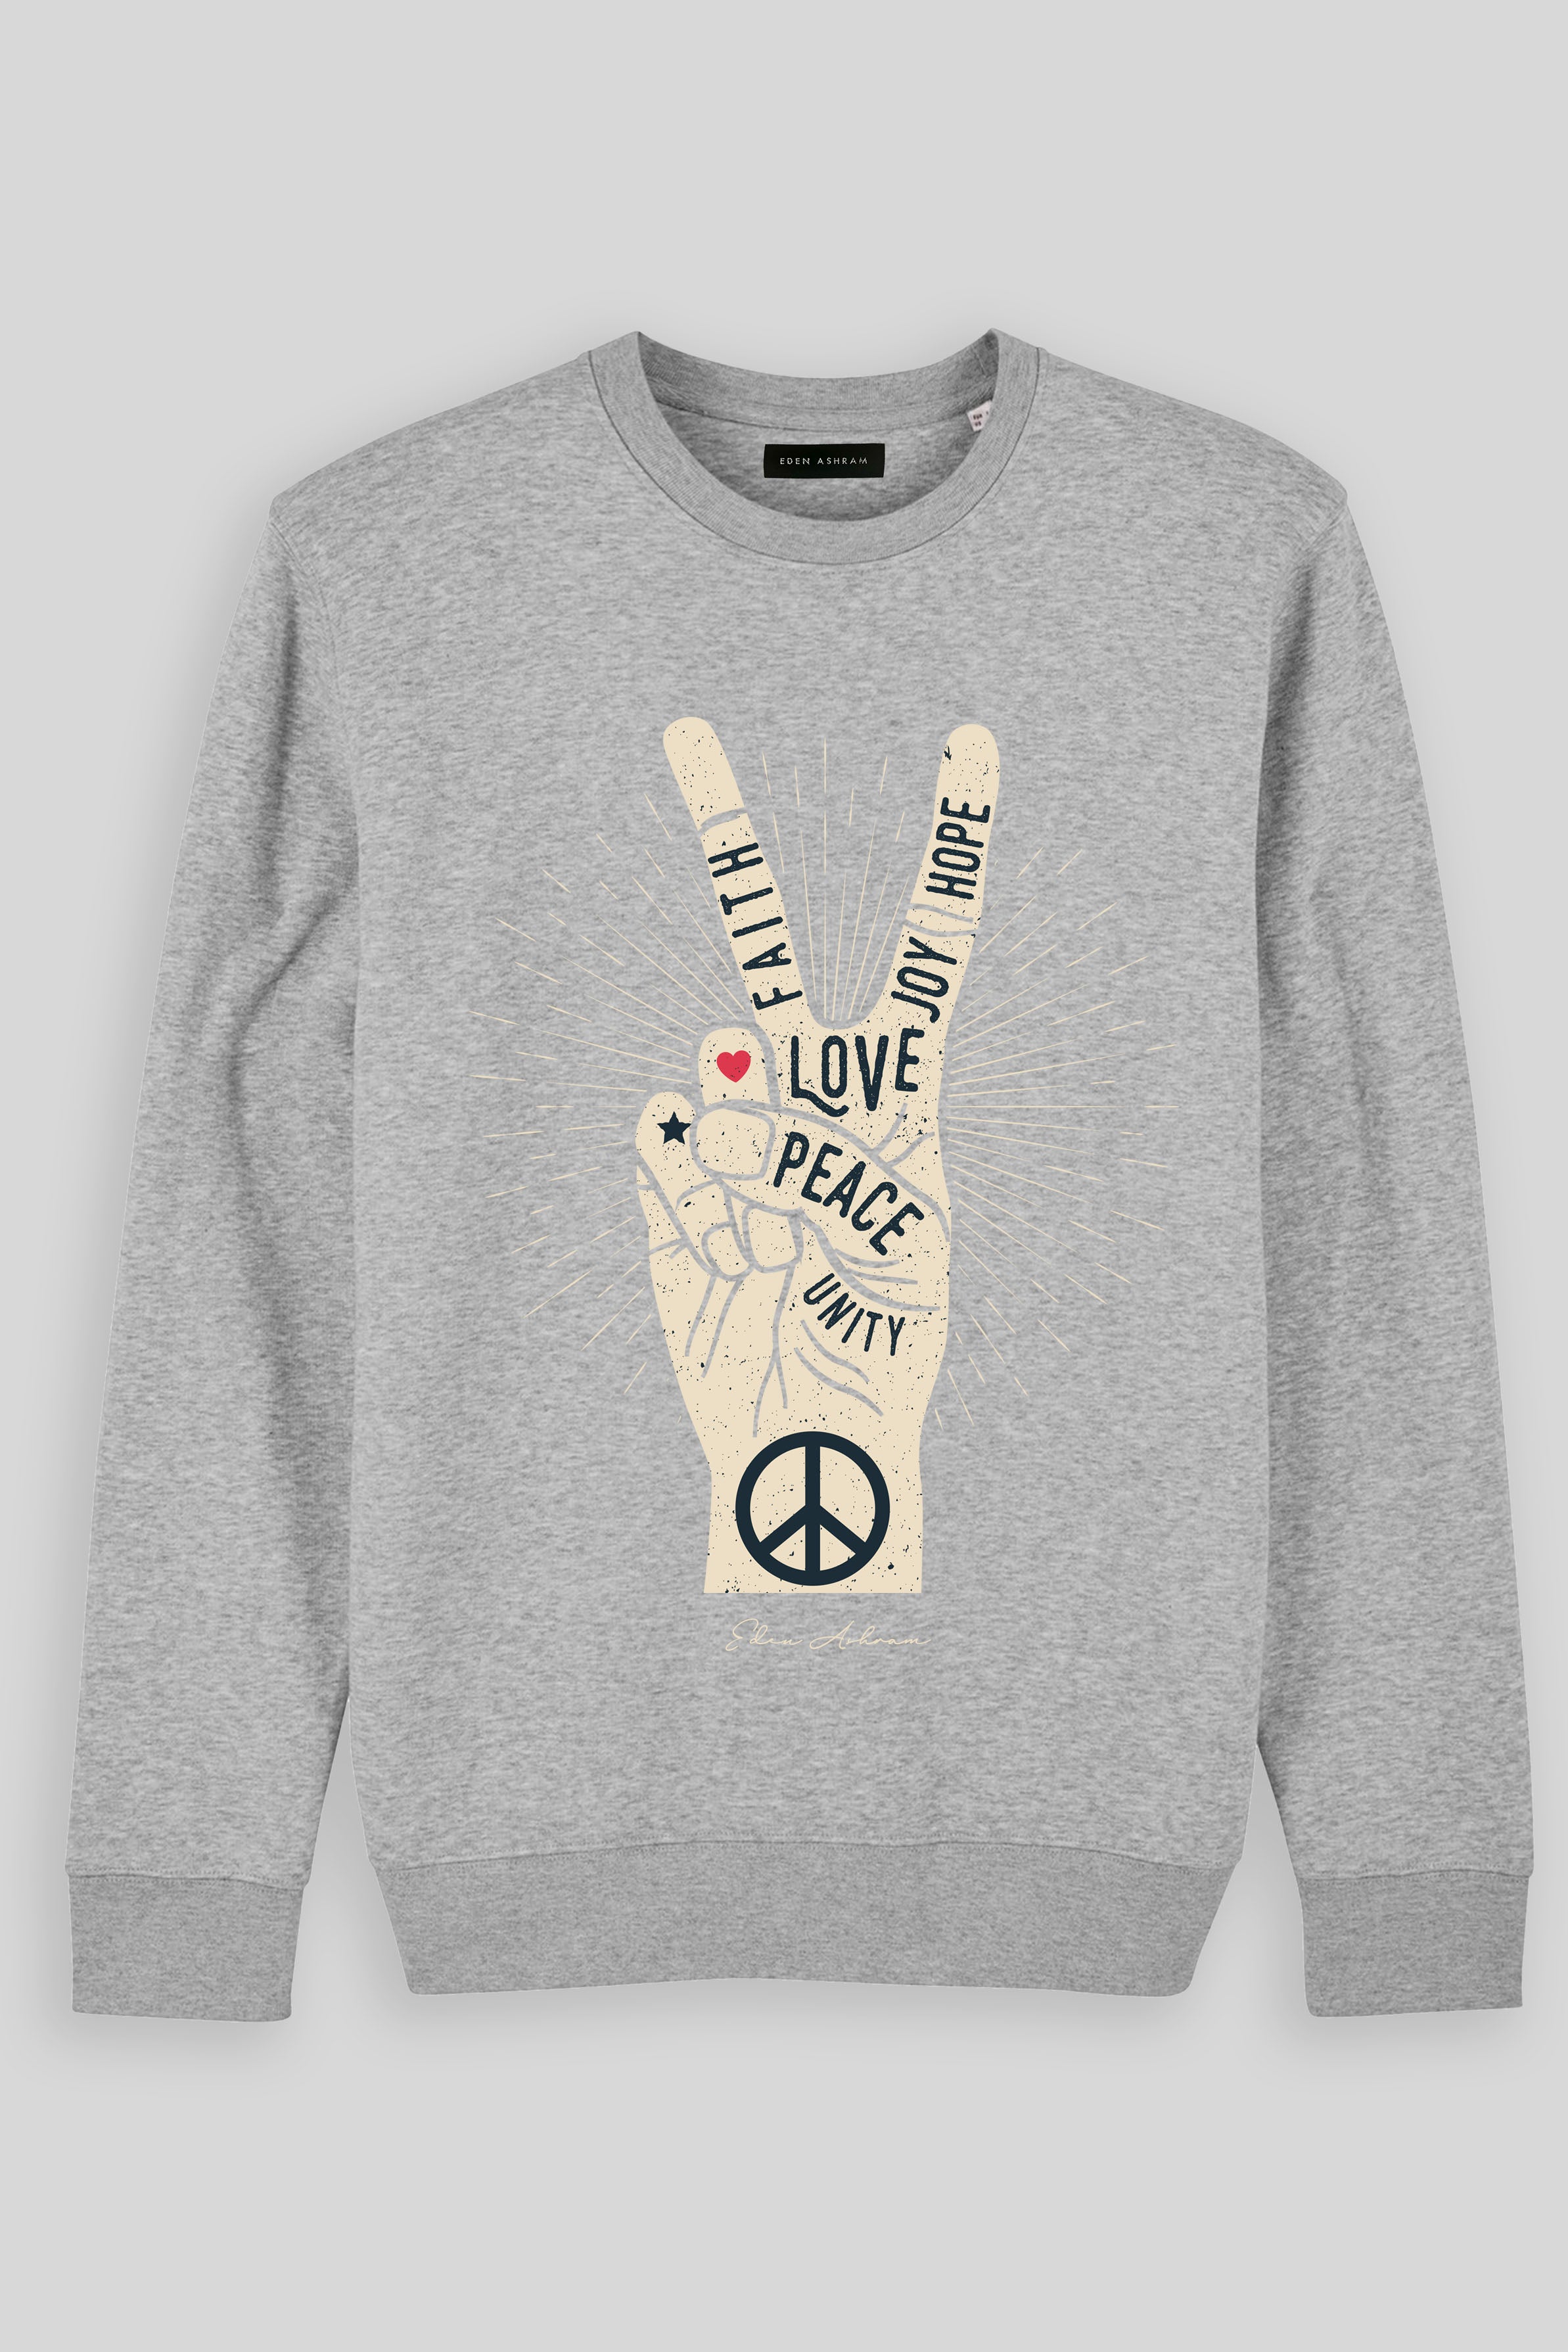 Eden Ashram Peace, Love, Unity, Faith, Joy & Hope Premium Crew Neck Sweatshirt Heather Grey